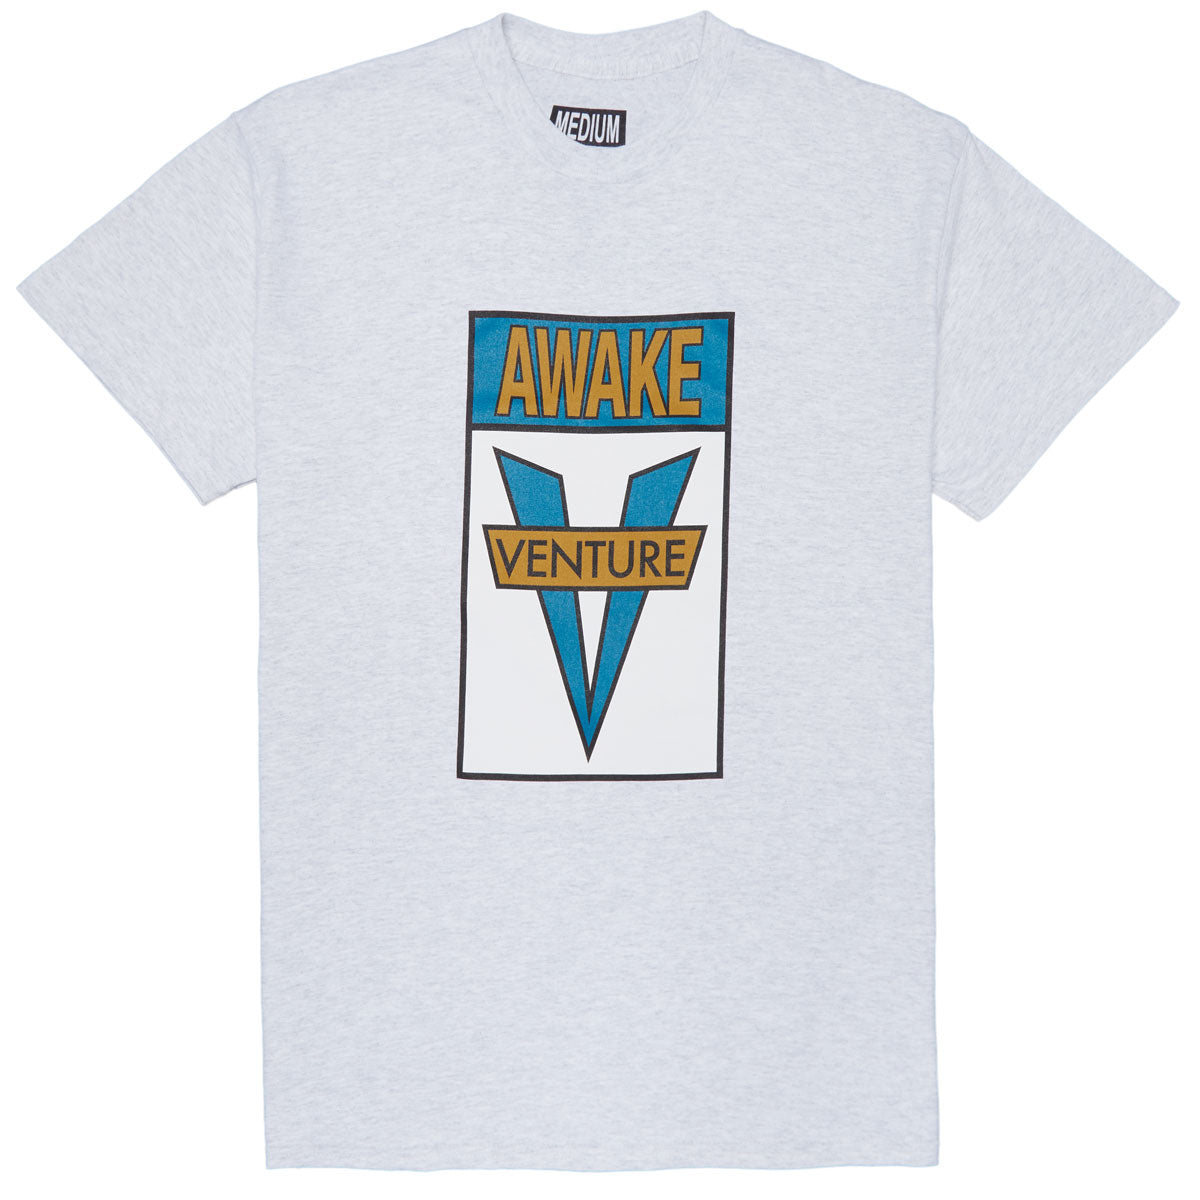 Venture Awake Short Sleeve T-Shirt (Ash/Gold/Teal) - Apple Valley Emporium